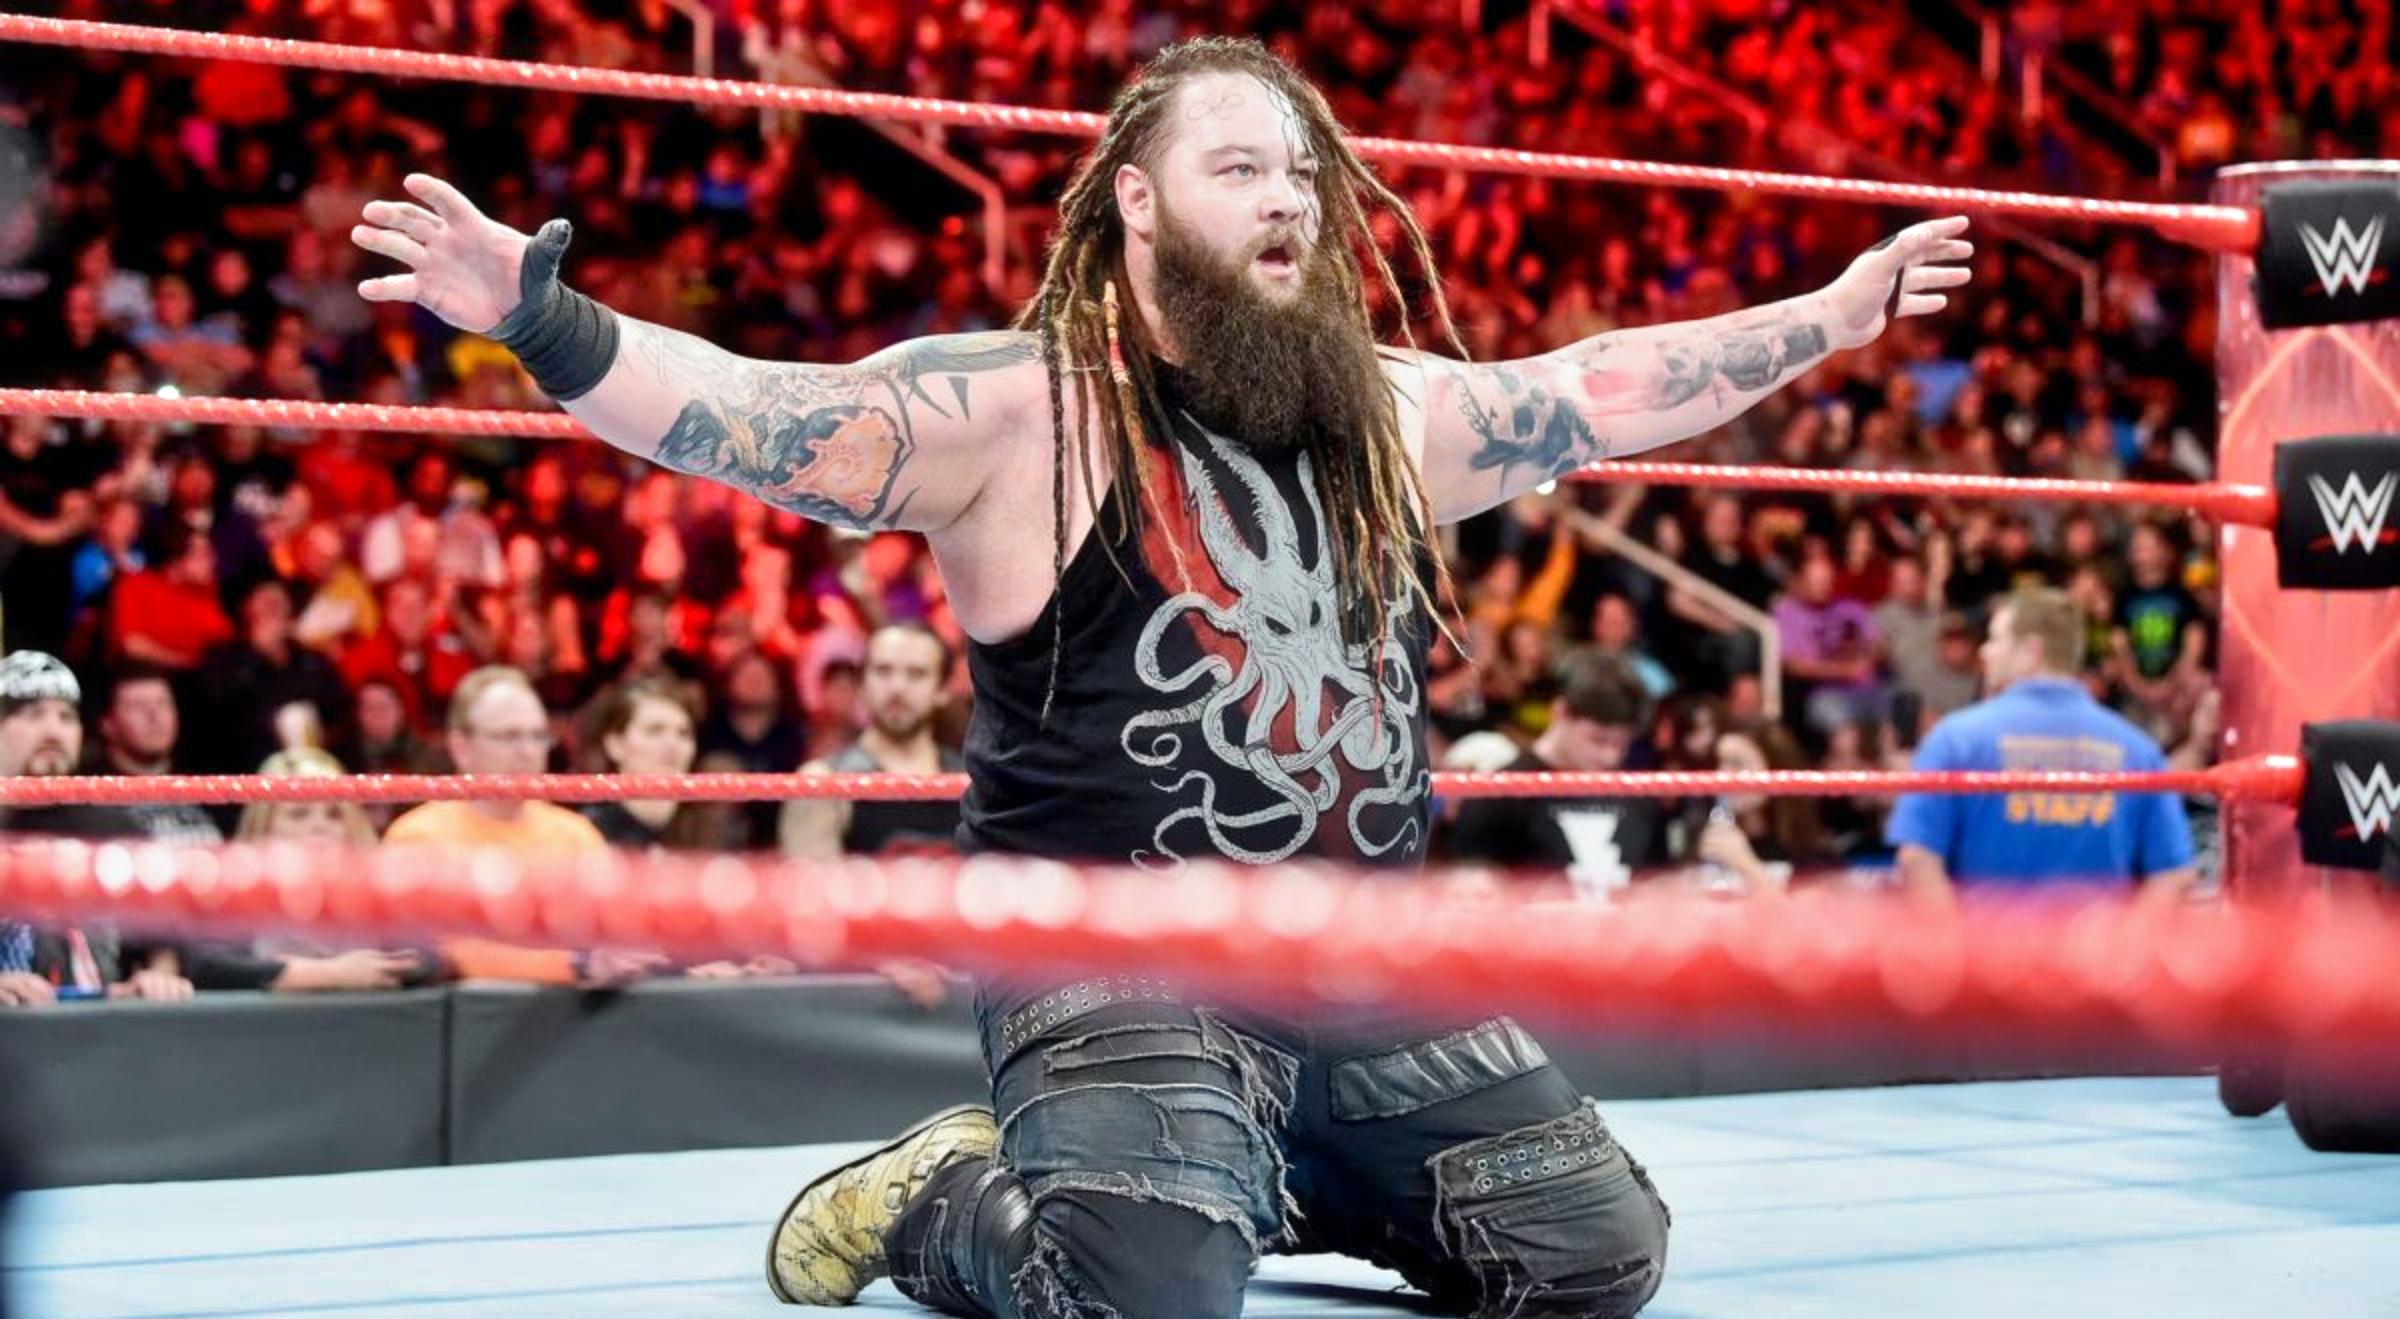 WWE Star Bray Wyatt Cause Of Death Revealed